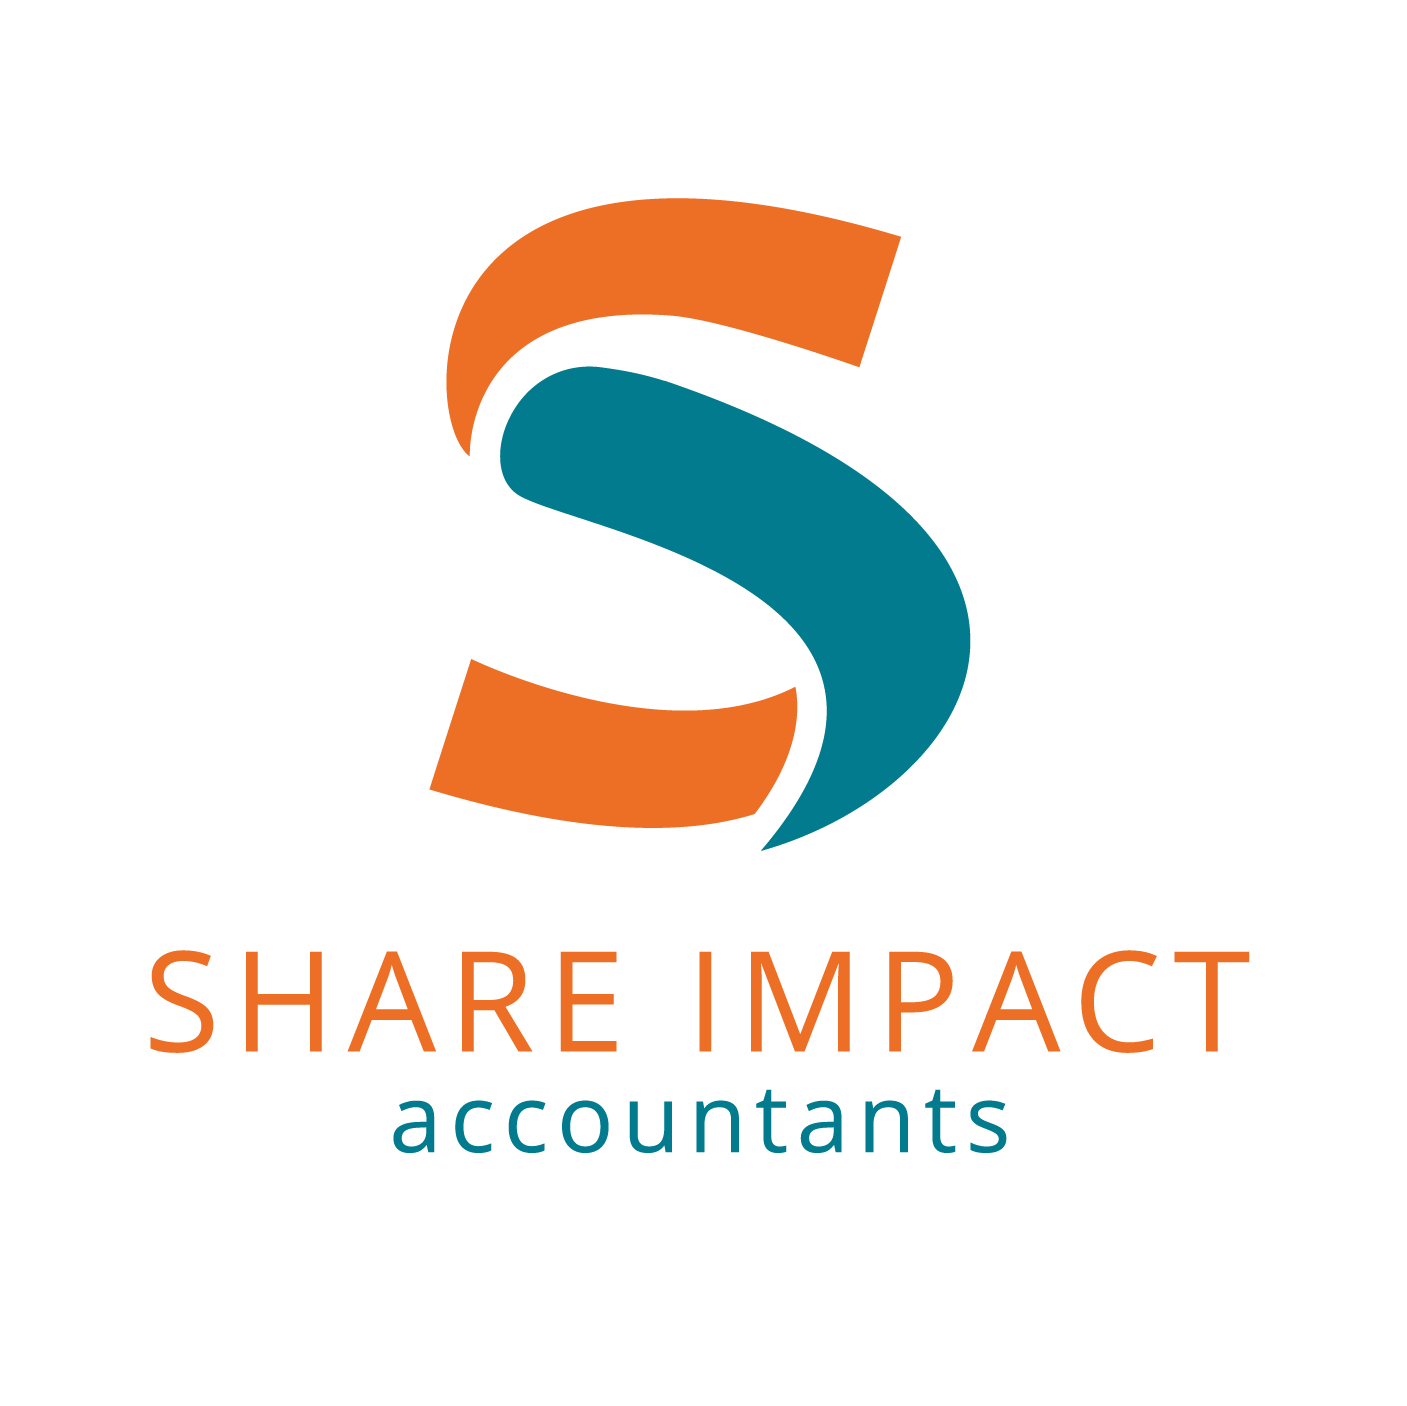 Share impact accountants